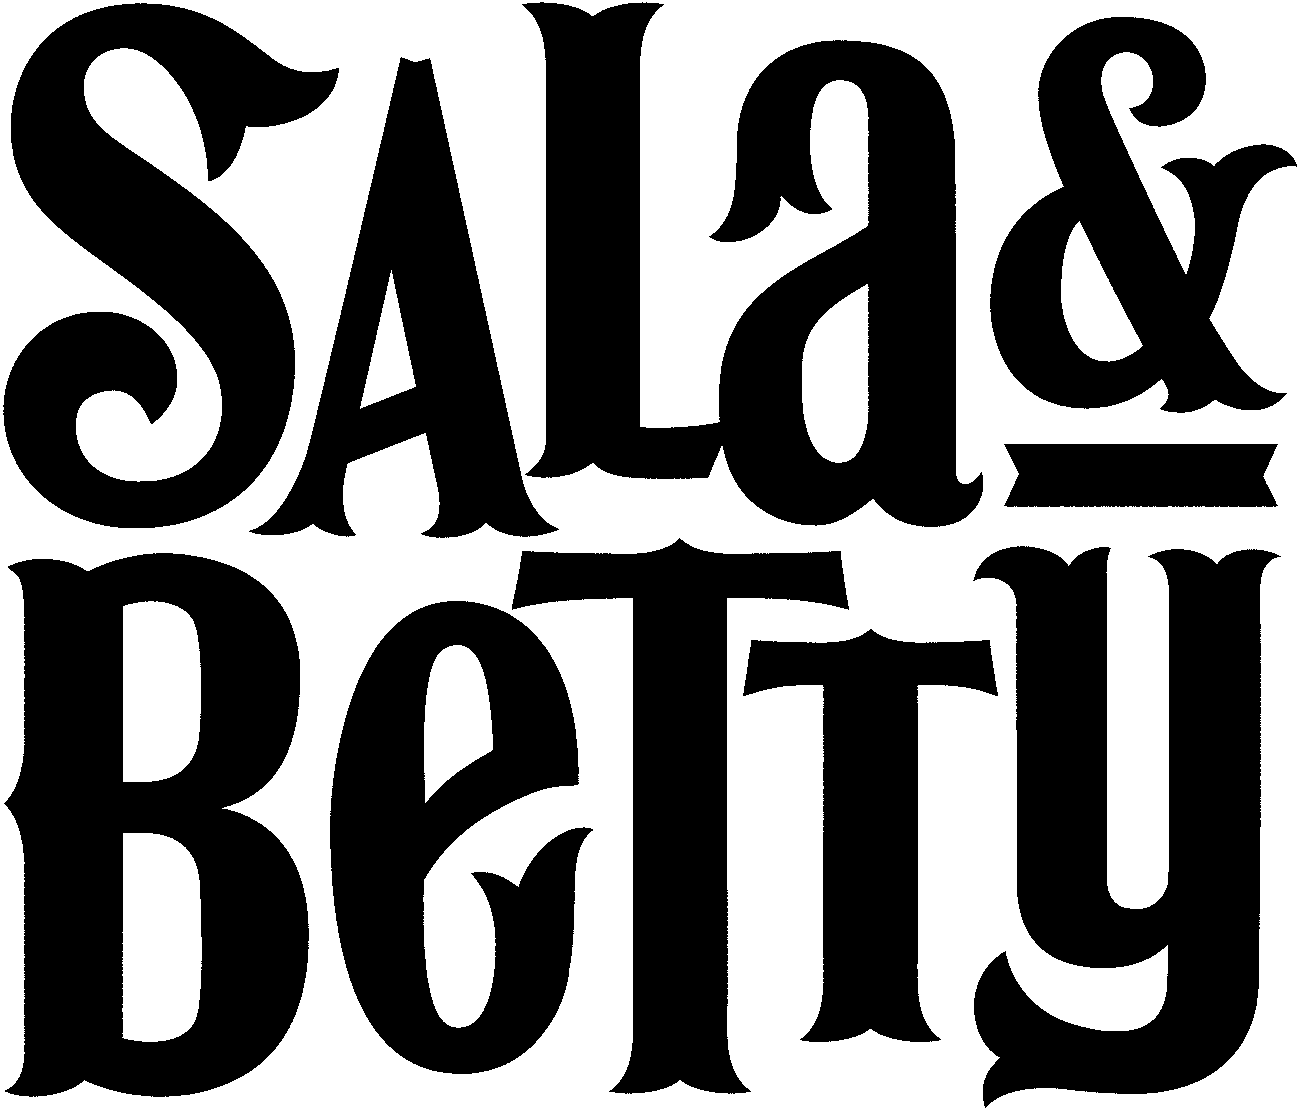 Sala and betty